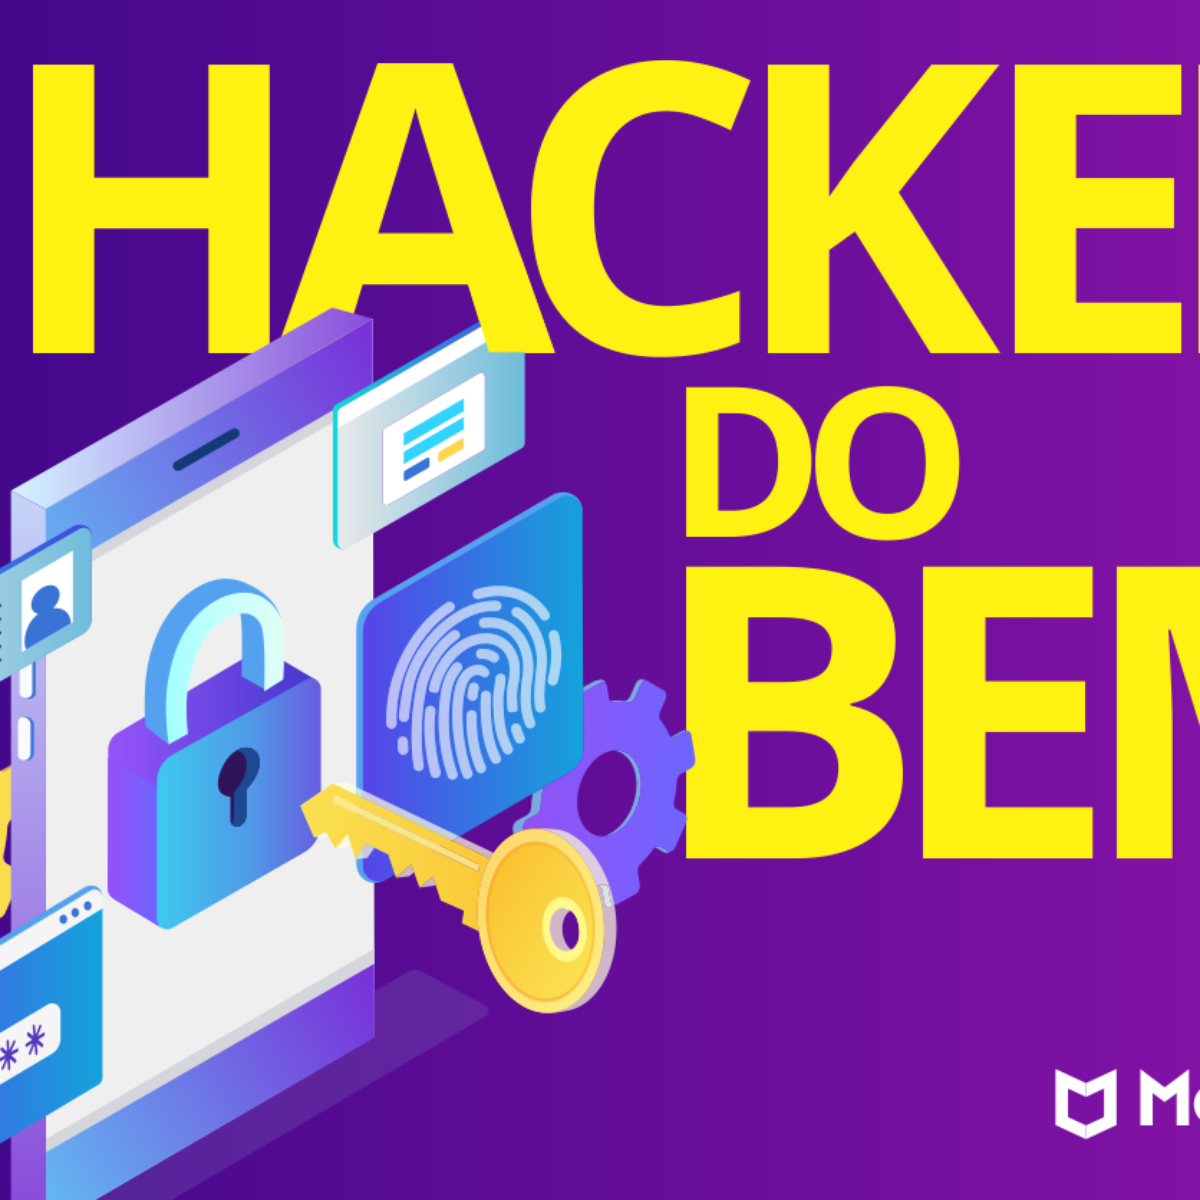 Hacker-ético denuncia grave vulnerabilidade no webmail UOL - TecMundo